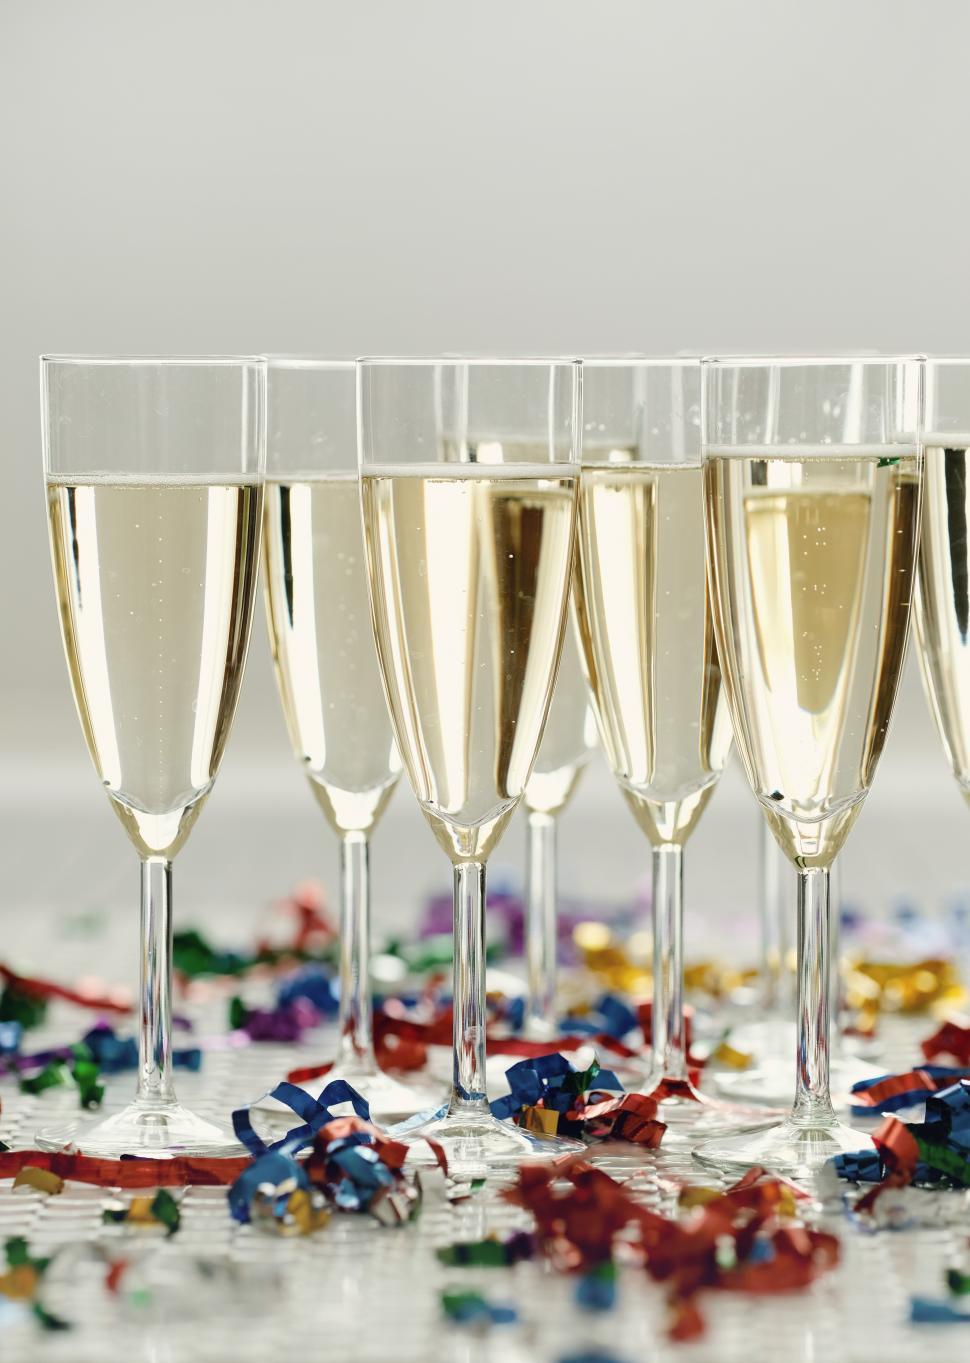 Free Image of Champagne celebration 